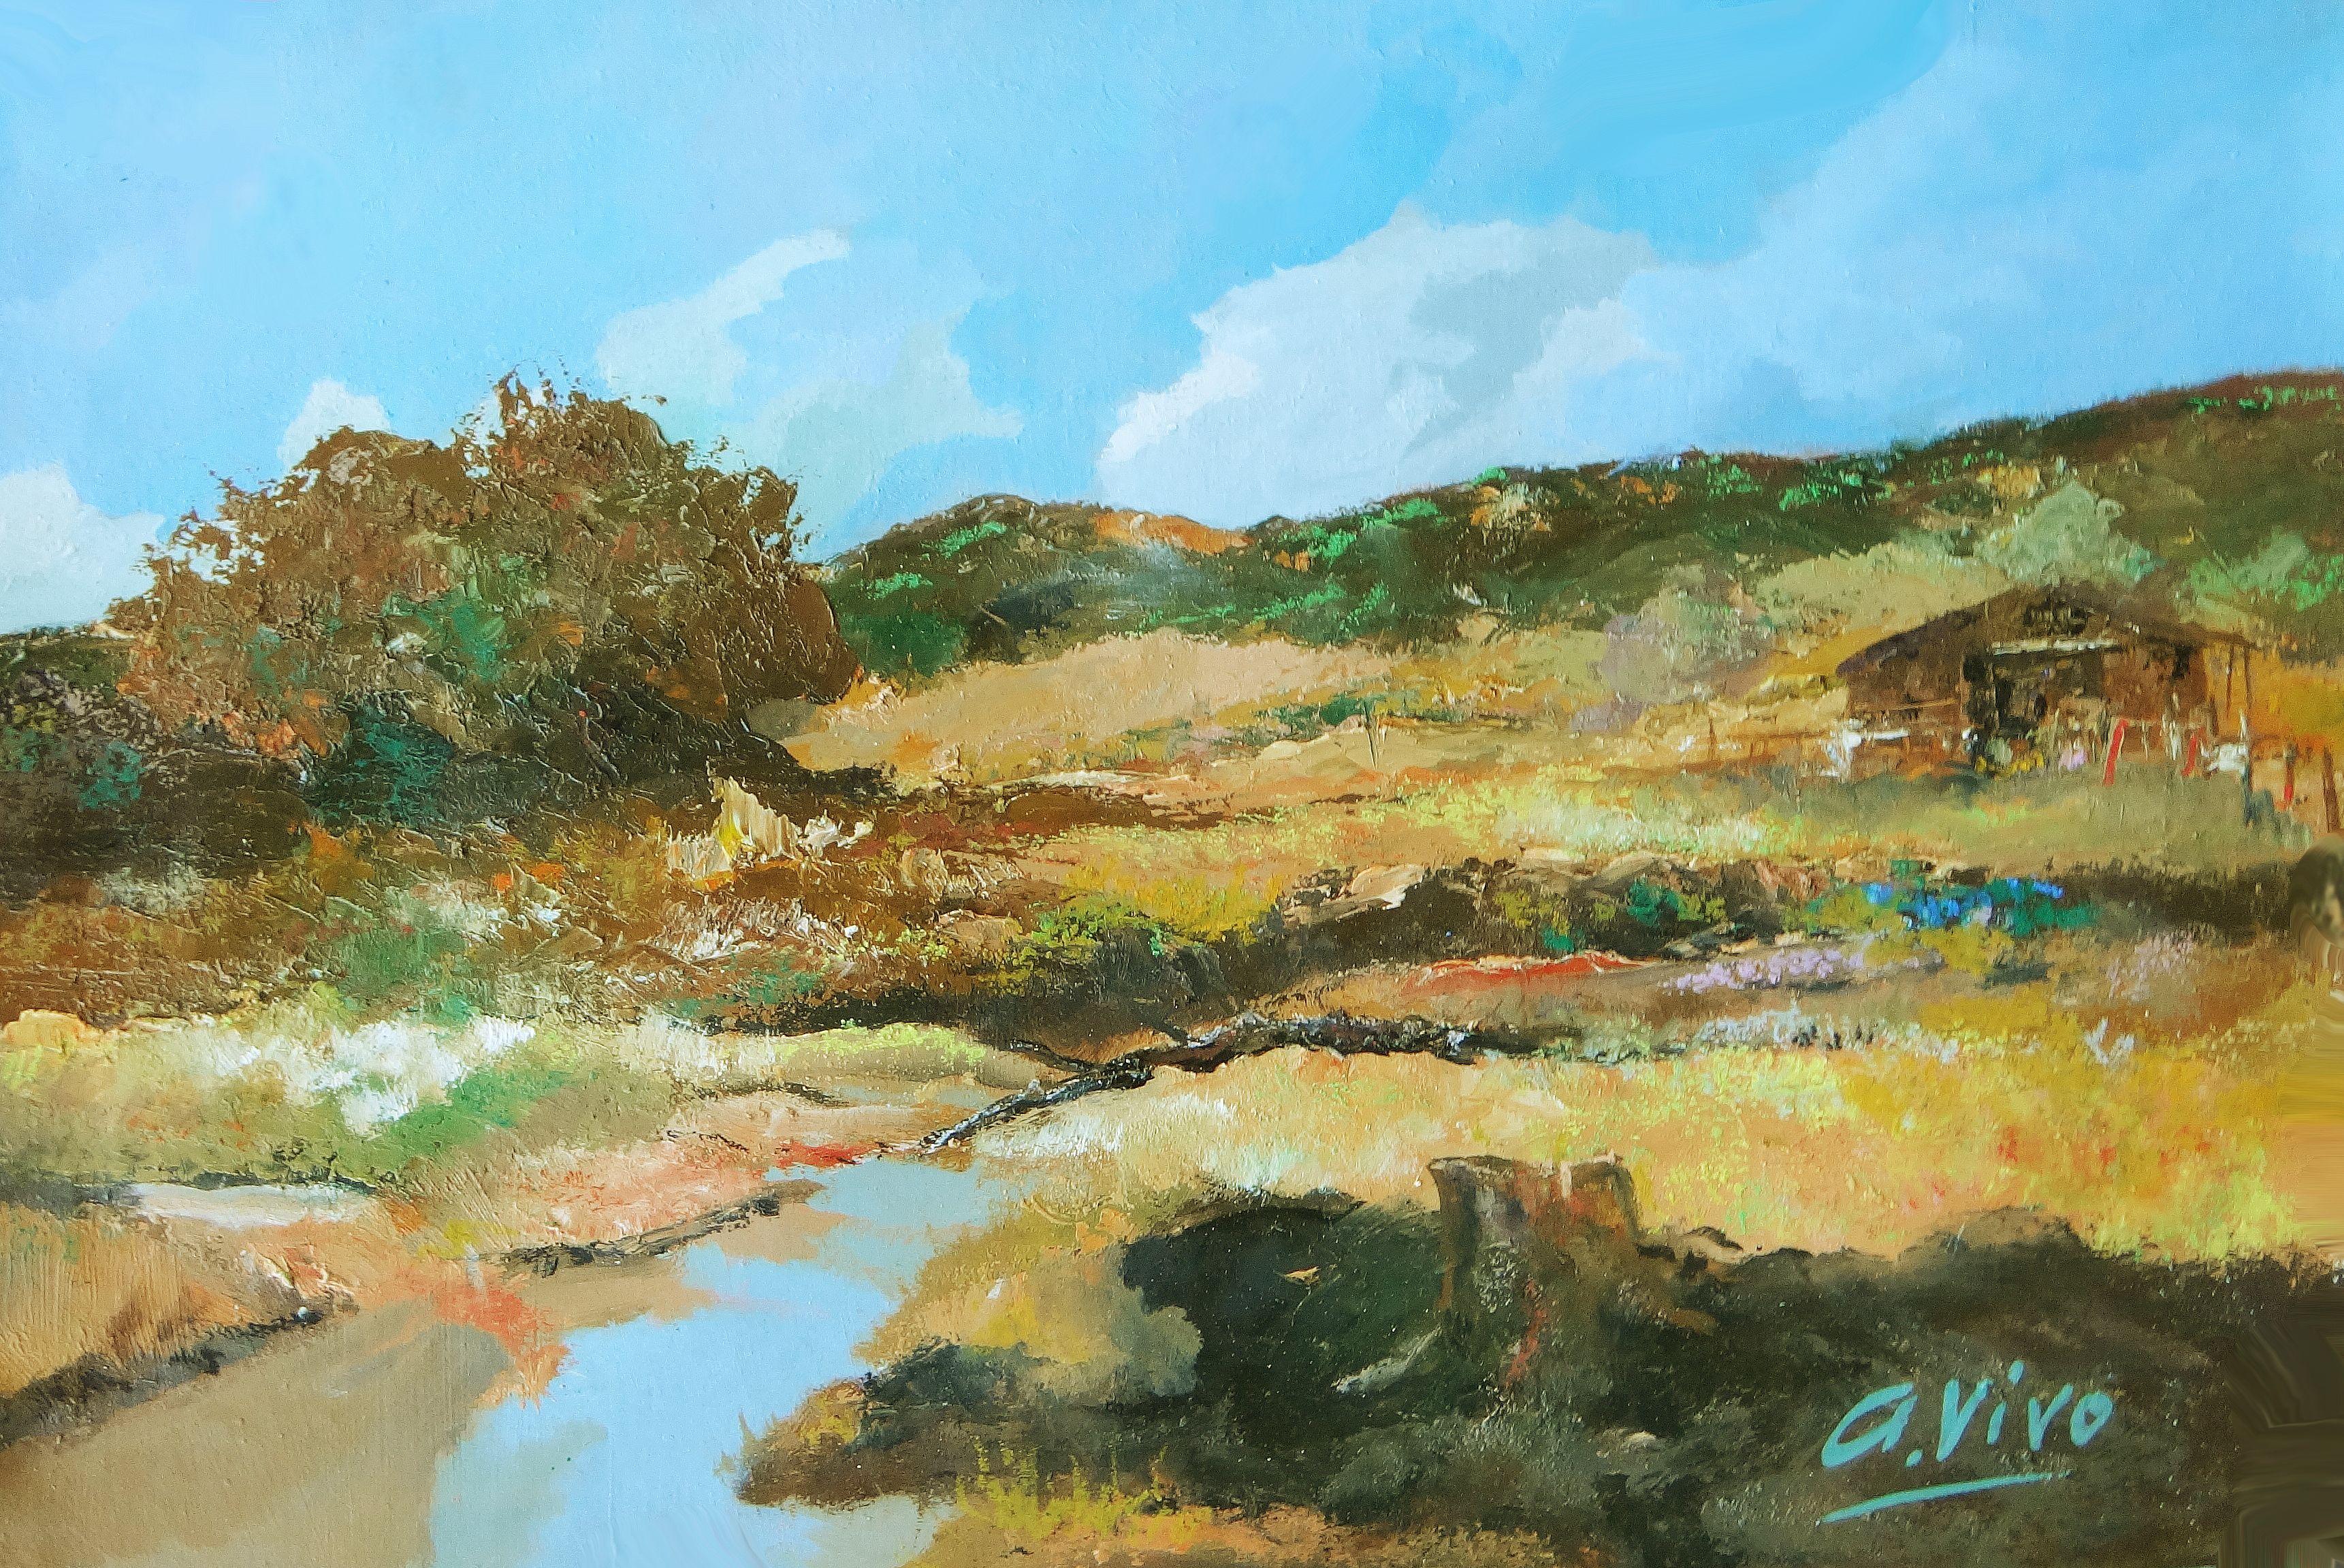 Andres Vivo Landscape Painting - 4803 En el bajo, Painting, Oil on Canvas